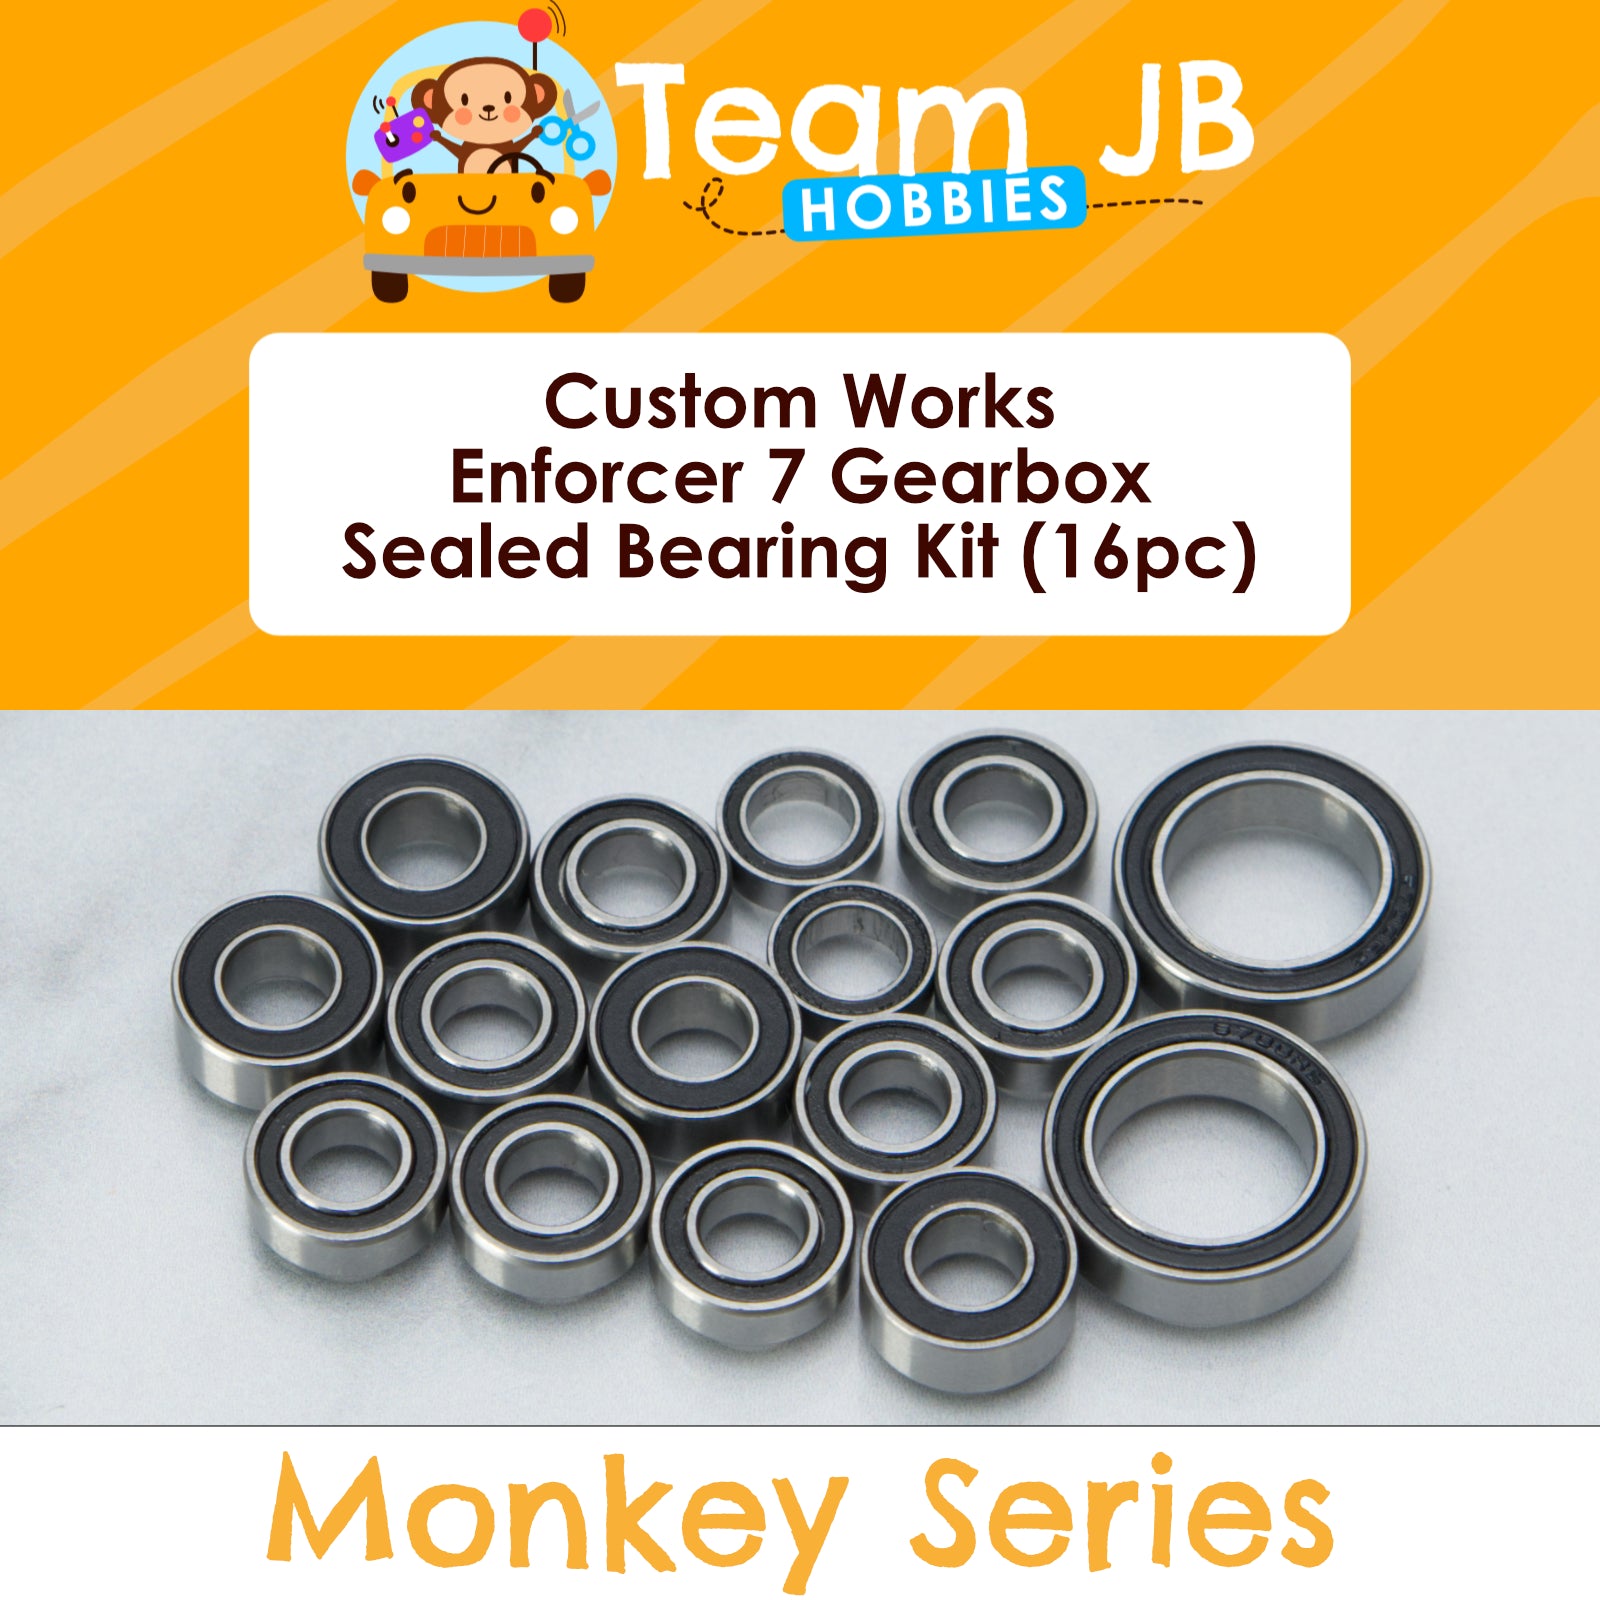 Custom Works Enforcer 7 Gearbox - Sealed Bearing Kit